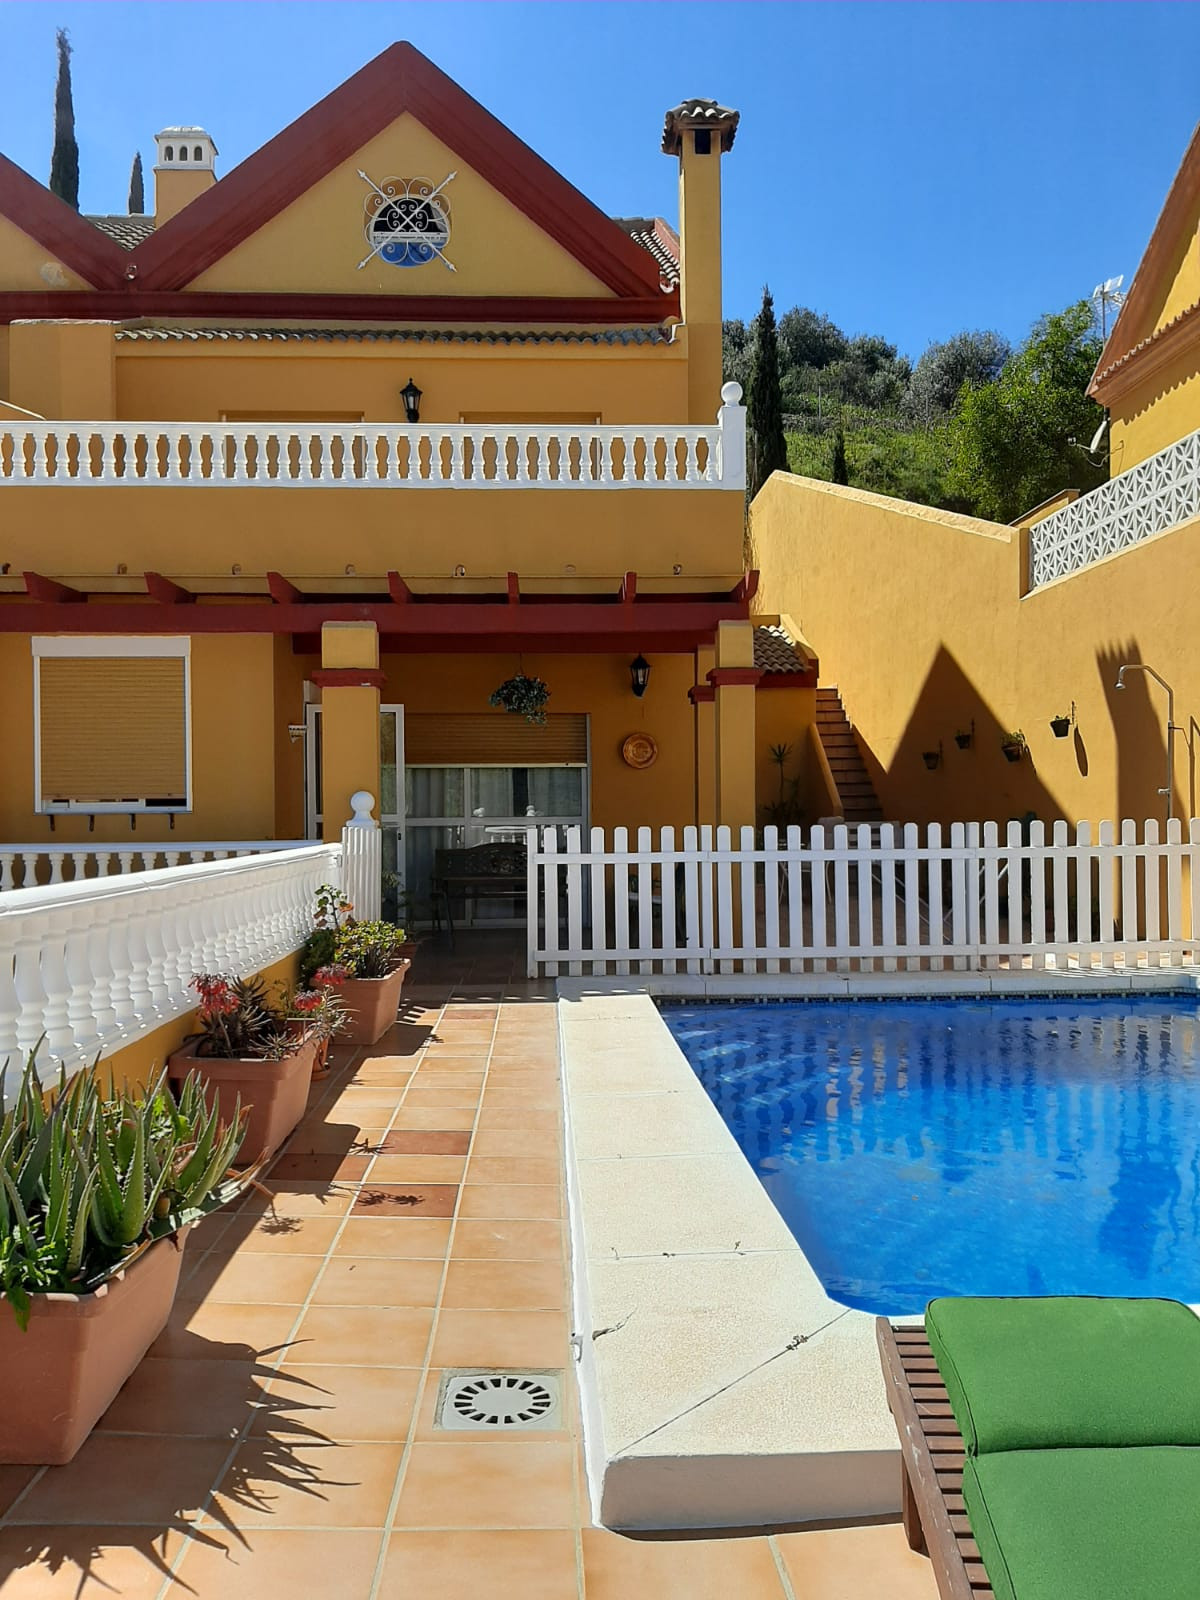 						Villa  Semi Individuelle
													en vente 
																			 à Torrequebrada
					